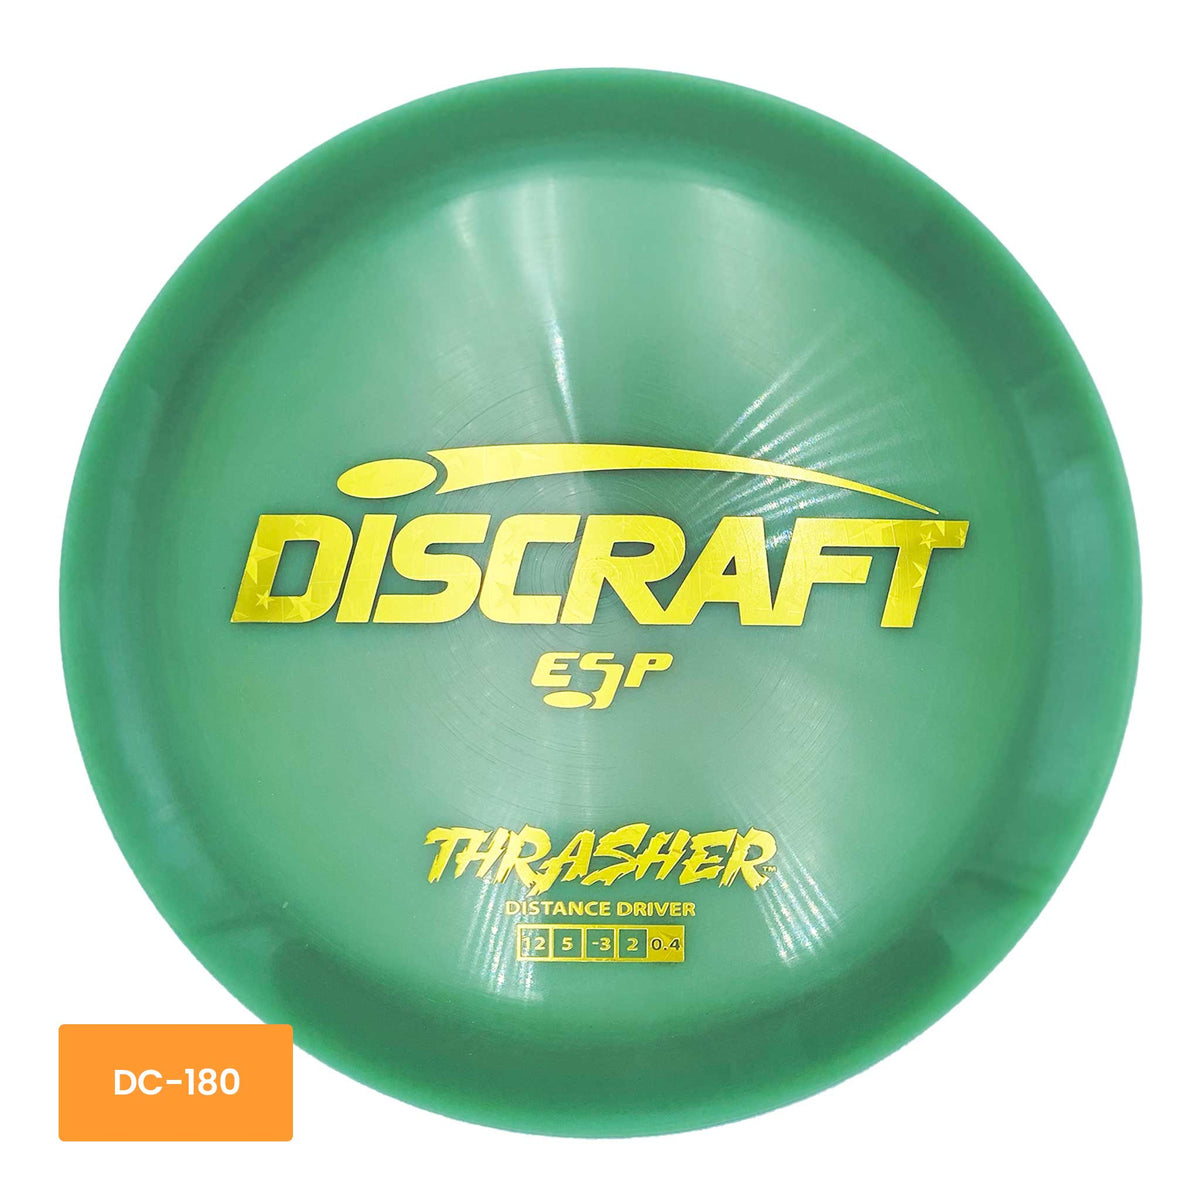 Discraft ESP Trasher distance driver - Green